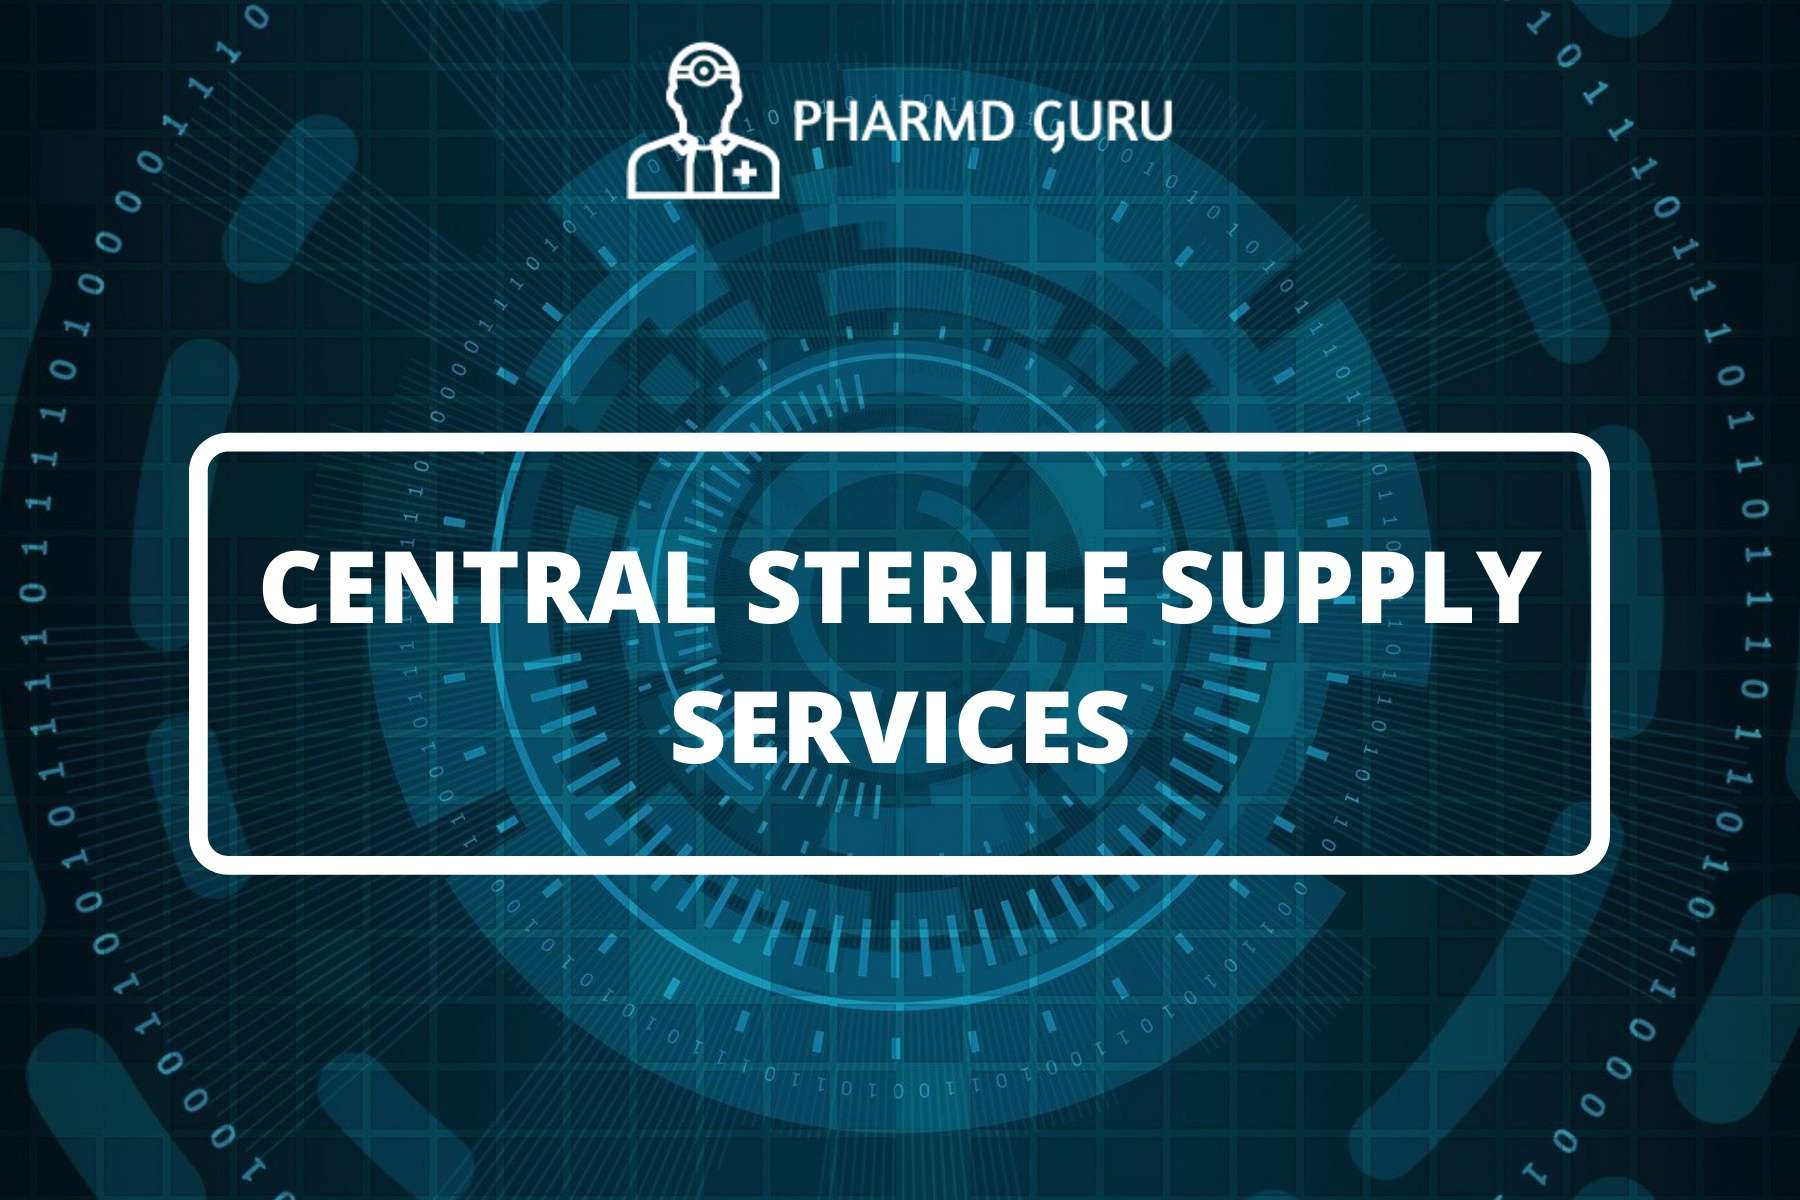 16. CENTRAL STERILE SUPPLY SERVICES - PHARMD GURU